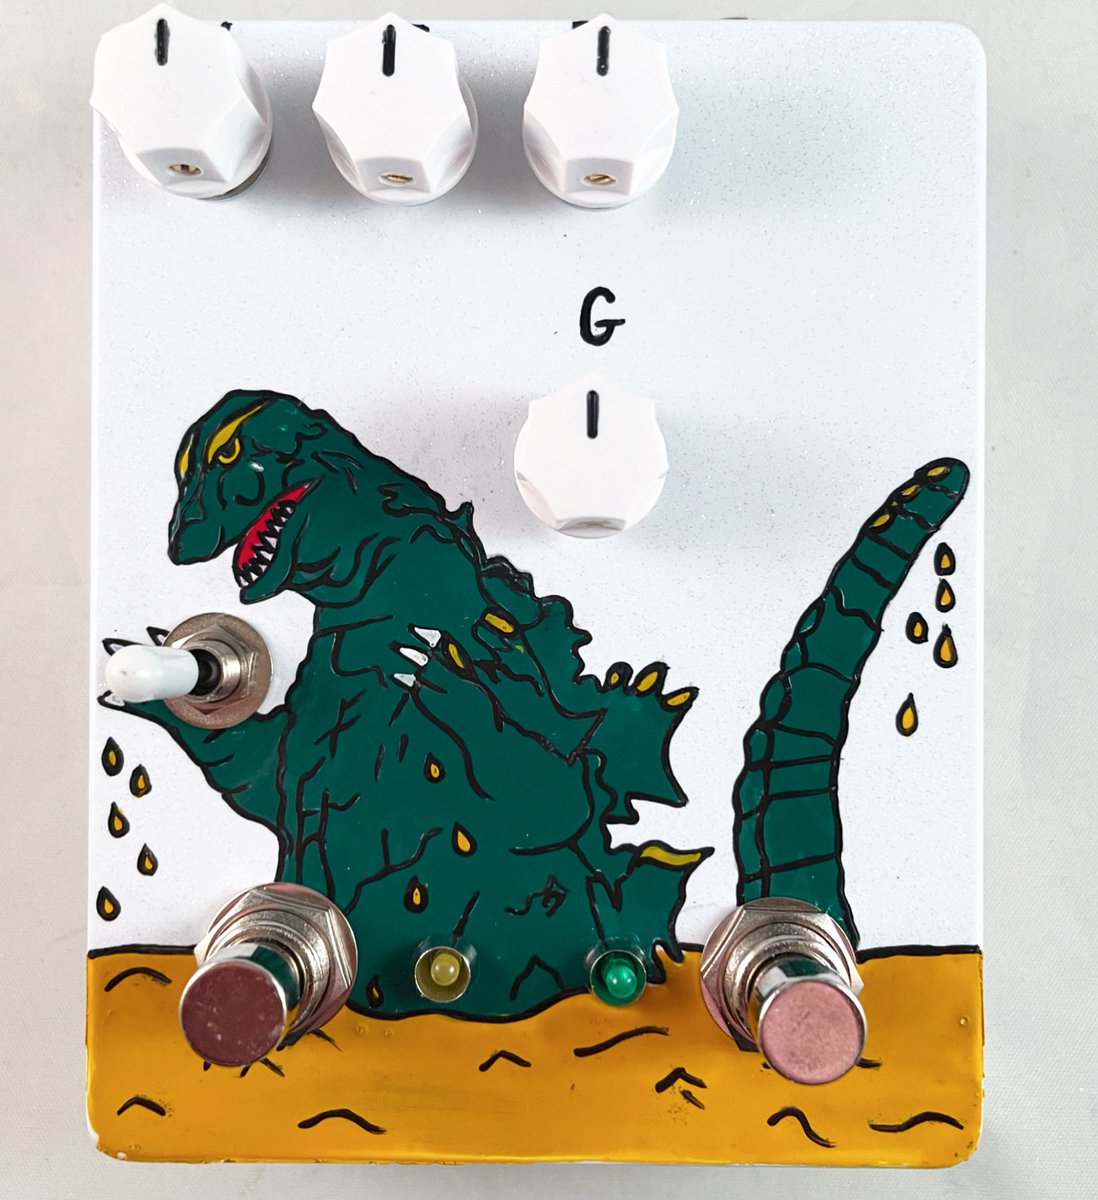 Customer-commissioned Godzilla art.
Li’l Fella overdrive/distortion + analog monophonic octave up.
Would you run from Godzilla or give his chubby tail a hug?
#fuzzrocious #fuzzrociouspedals #stompboxes #effectspedals #effectpedal #effectpedals #godzilla #gojira #kaiju